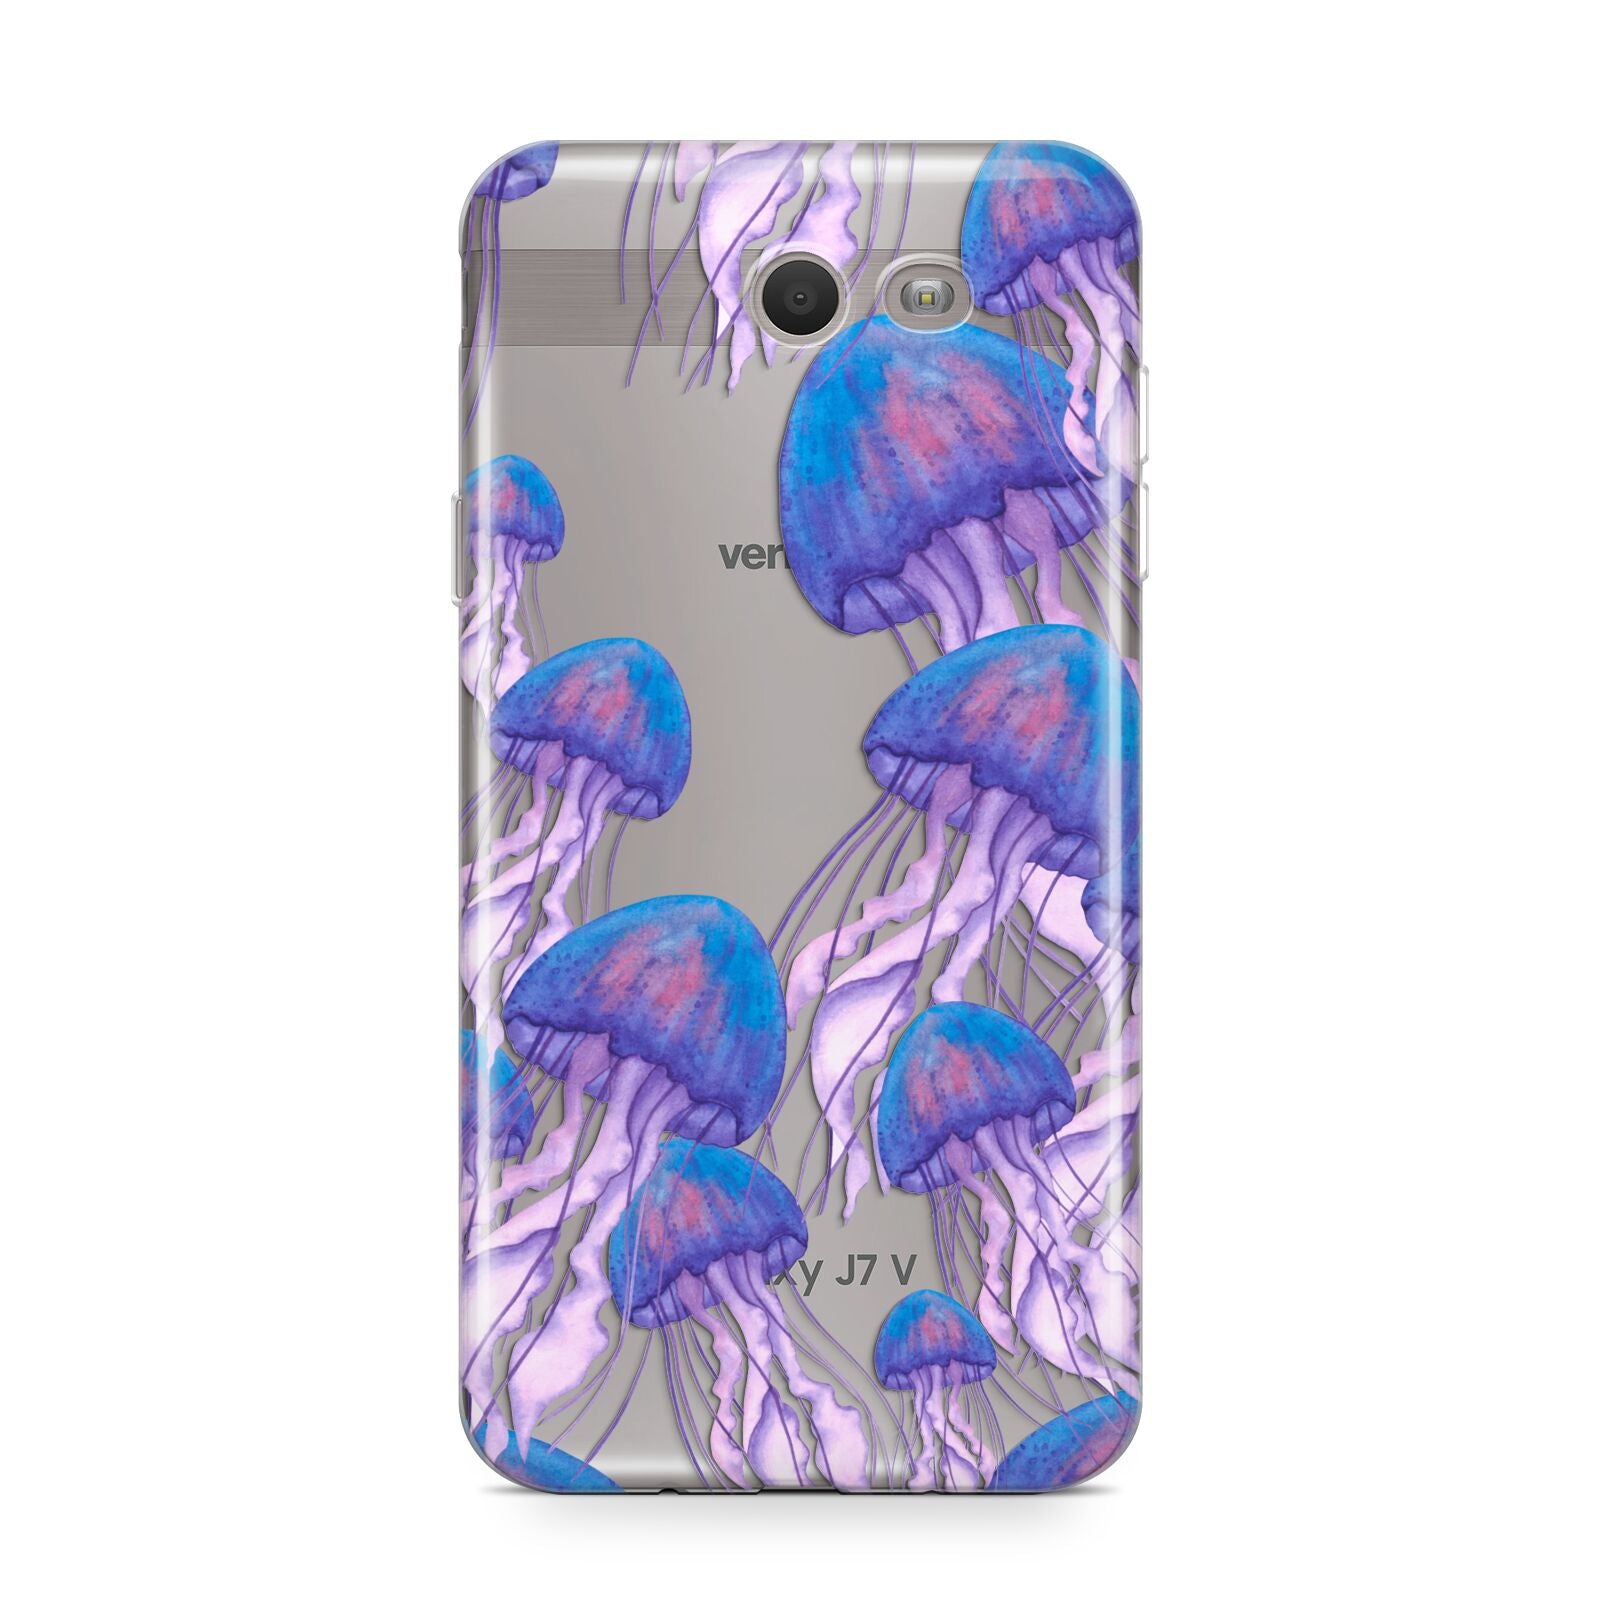 Jellyfish Samsung Galaxy J7 2017 Case